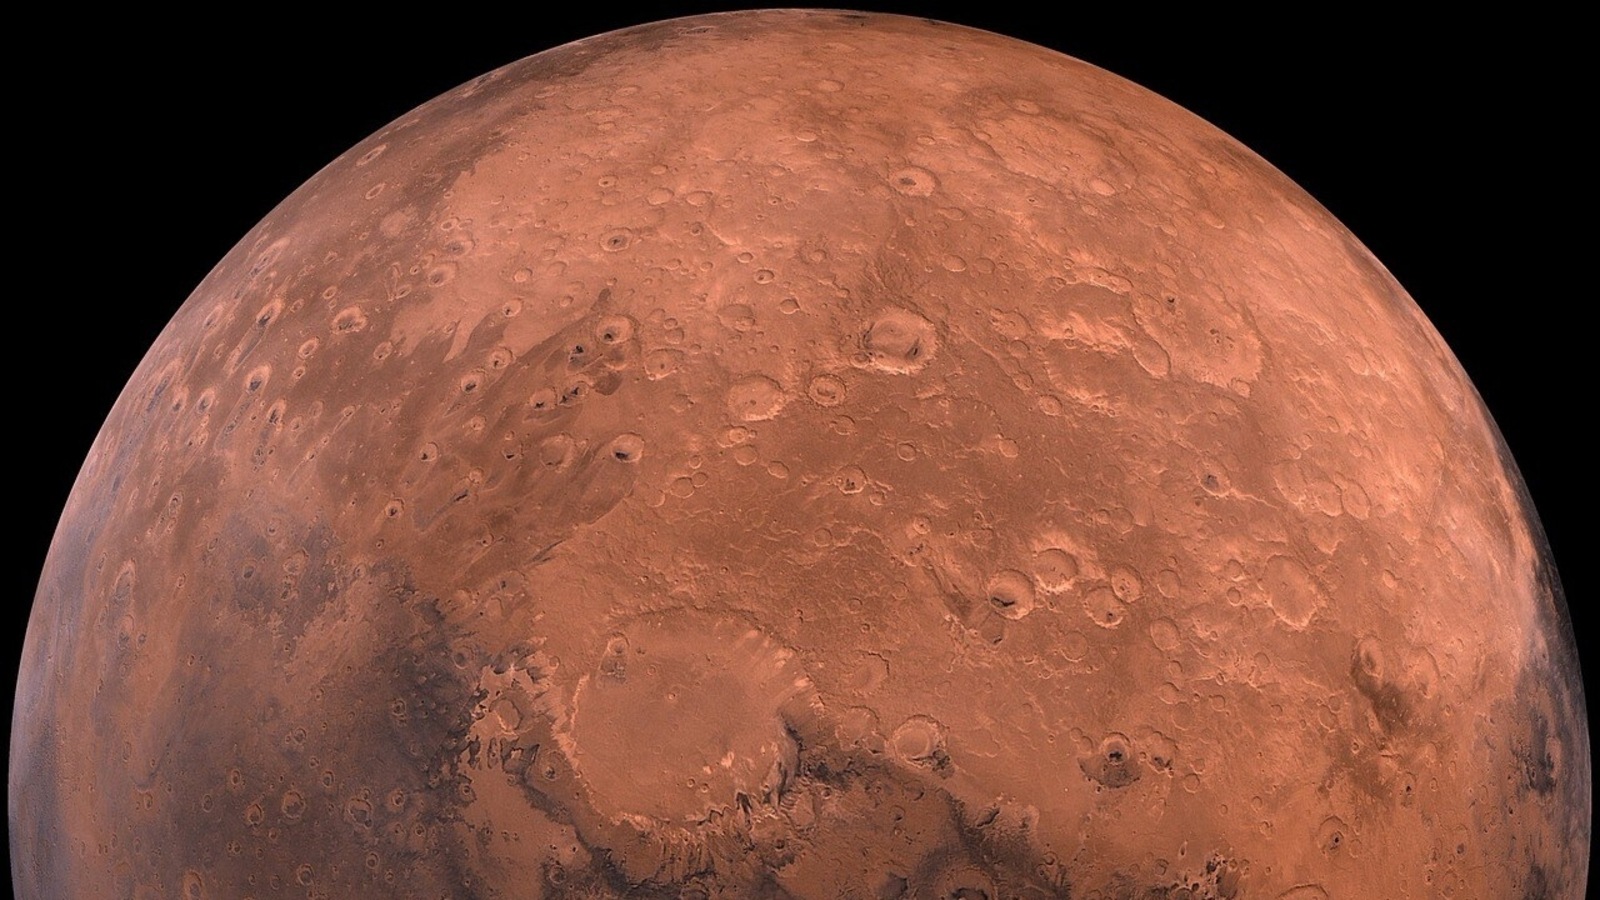 Life on Mars? Curiosity rover raises NASA hopes